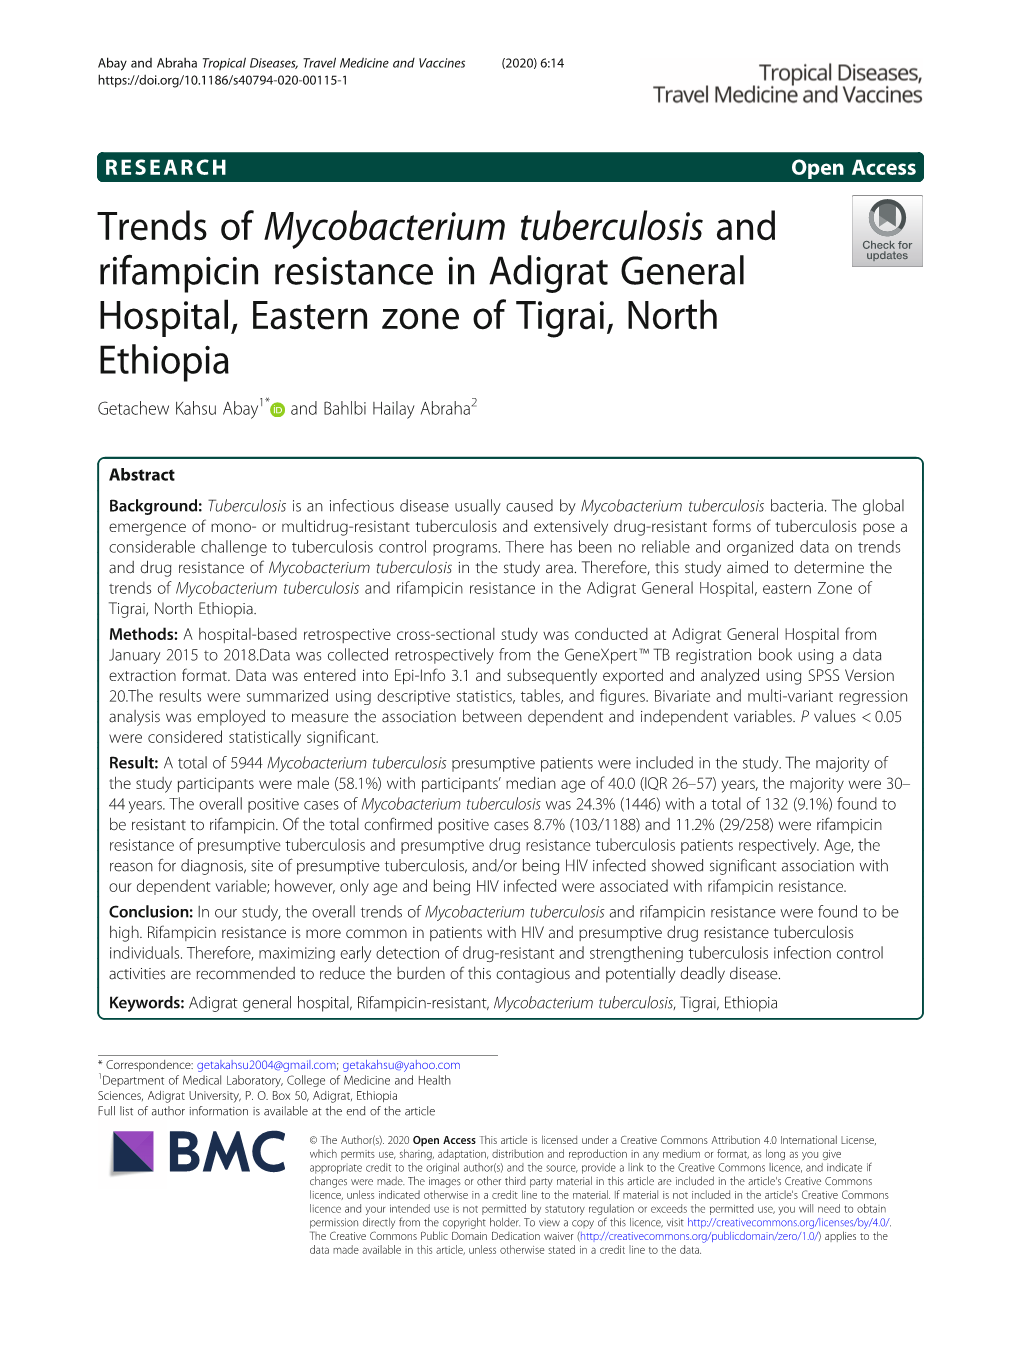 Trends of Mycobacterium Tuberculosis and Rifampicin Resistance in Adigrat General Hospital, Eastern Zone of Tigrai, North Ethiop